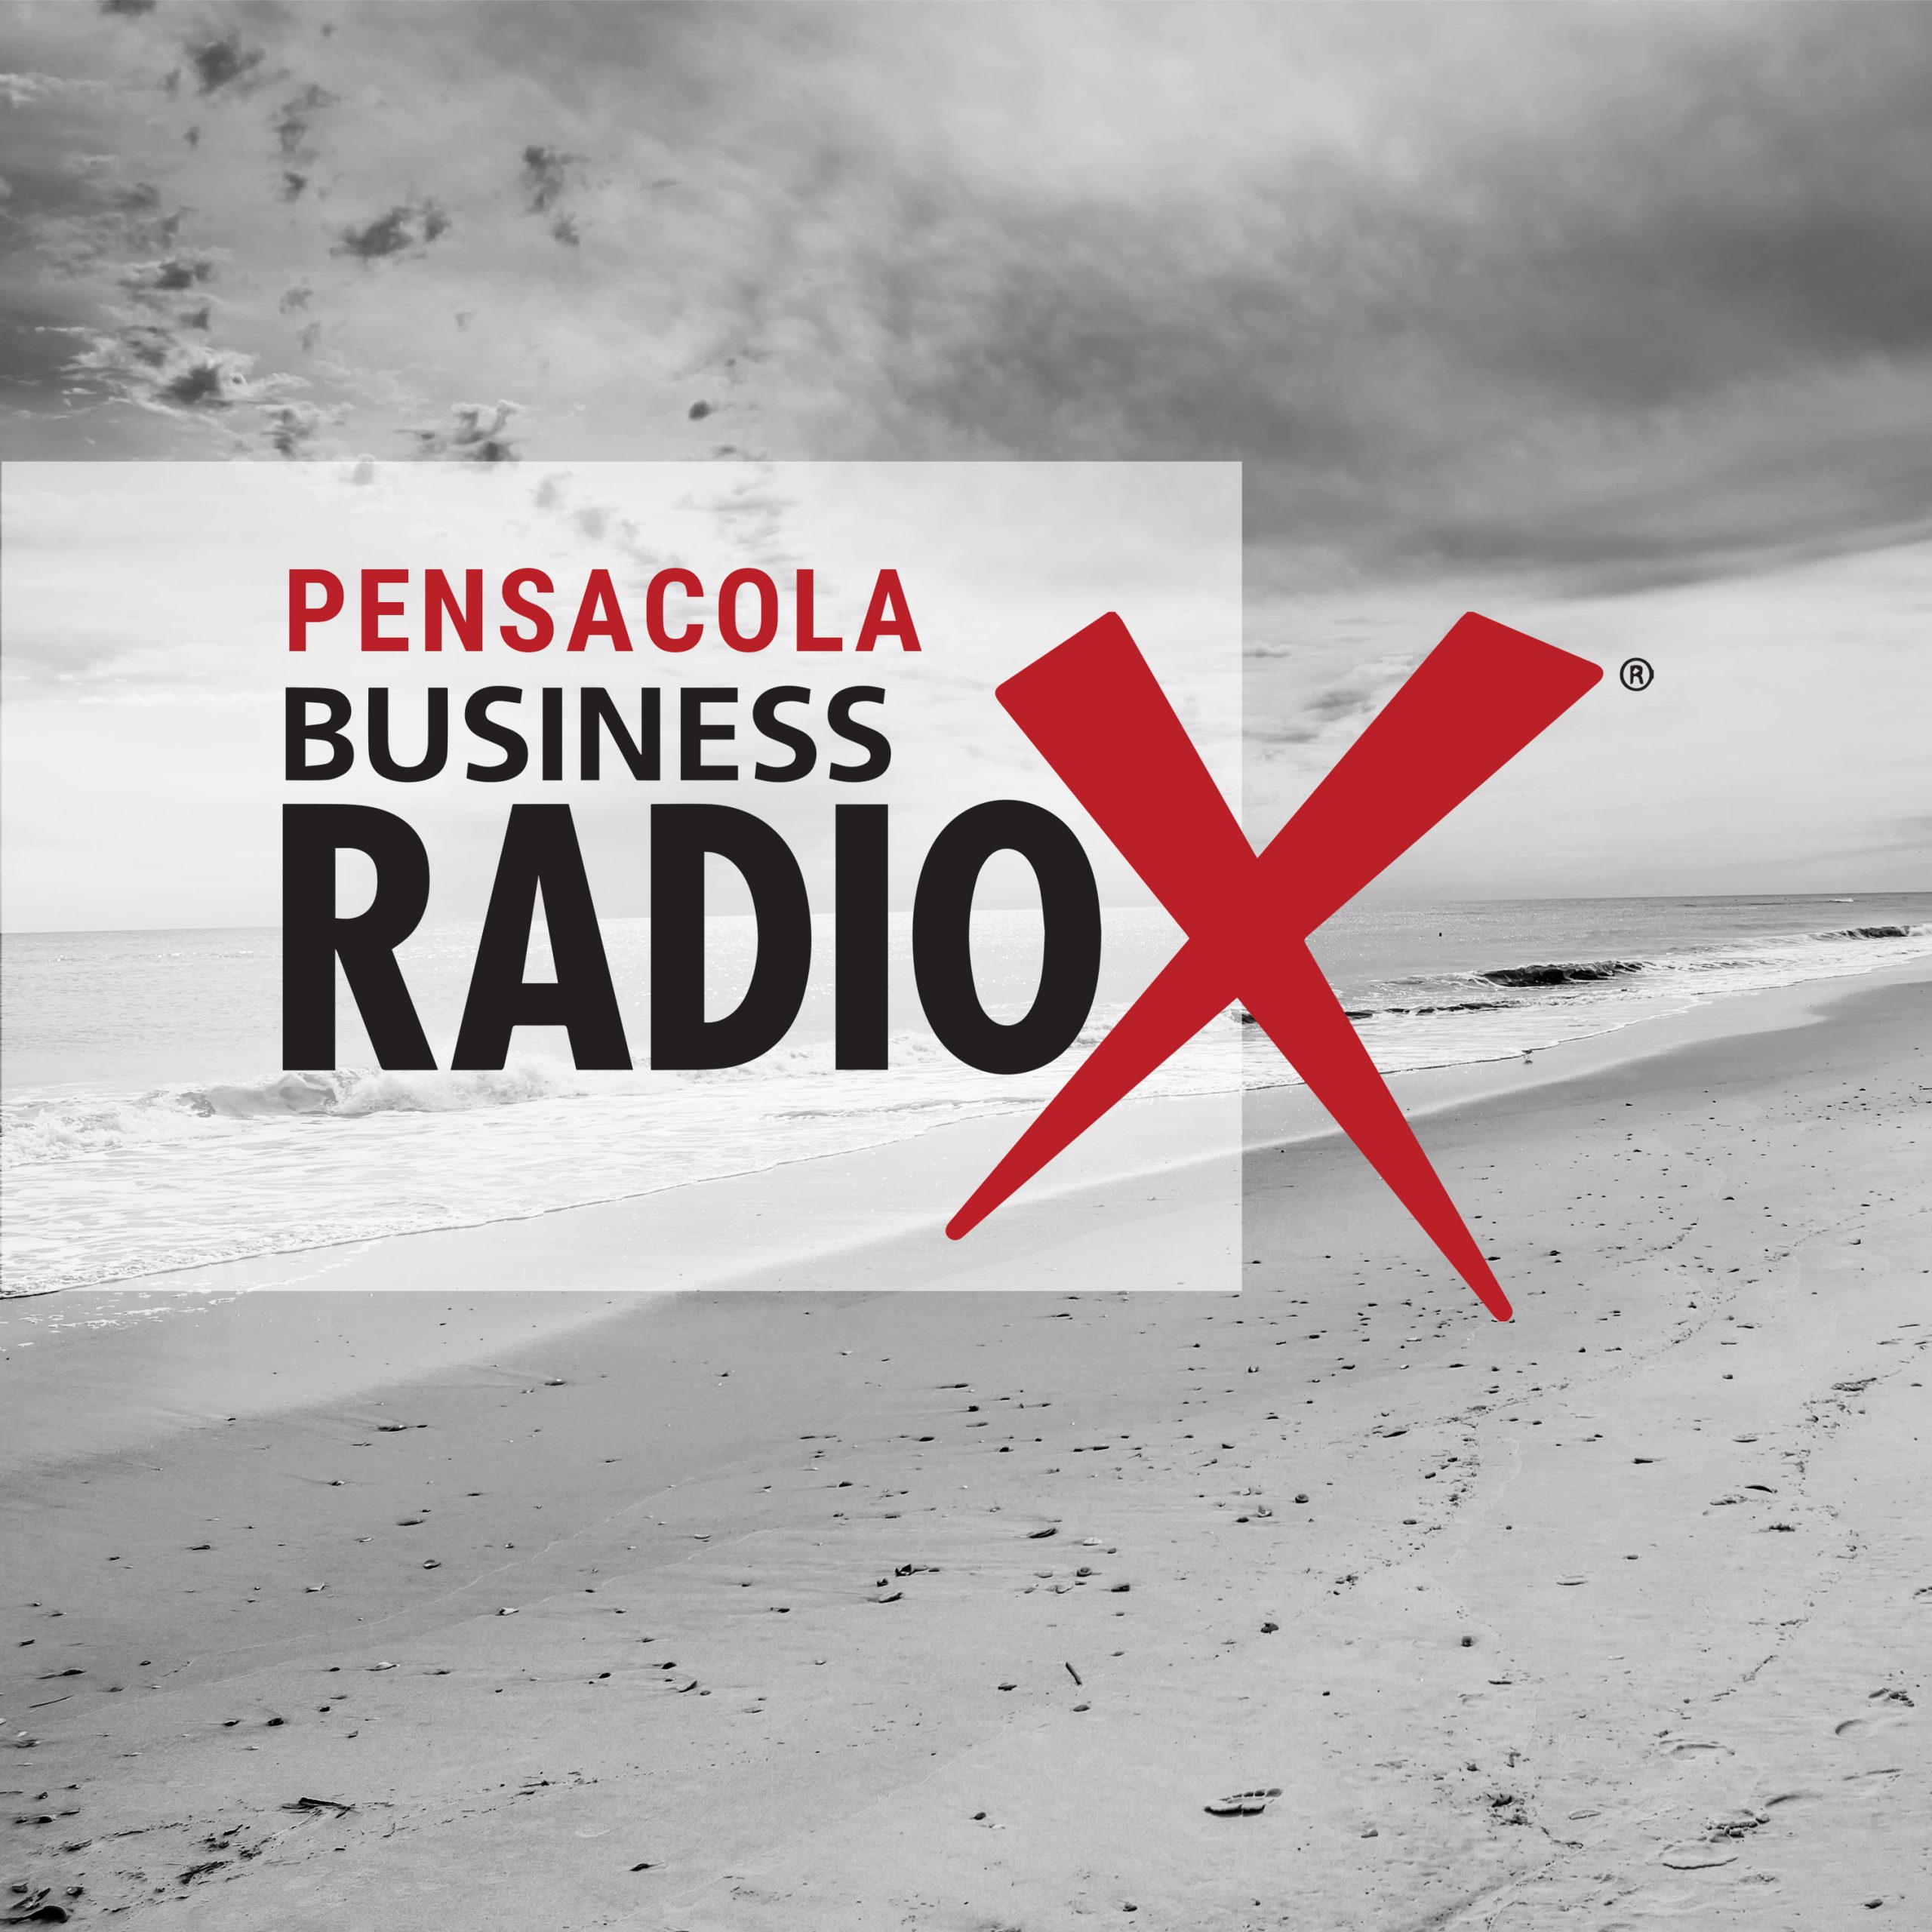 Pensacola Business Radio – FoodieLIFE episode 4 – 01.24.16 – Sponsored by Big Rhino Screen Printing